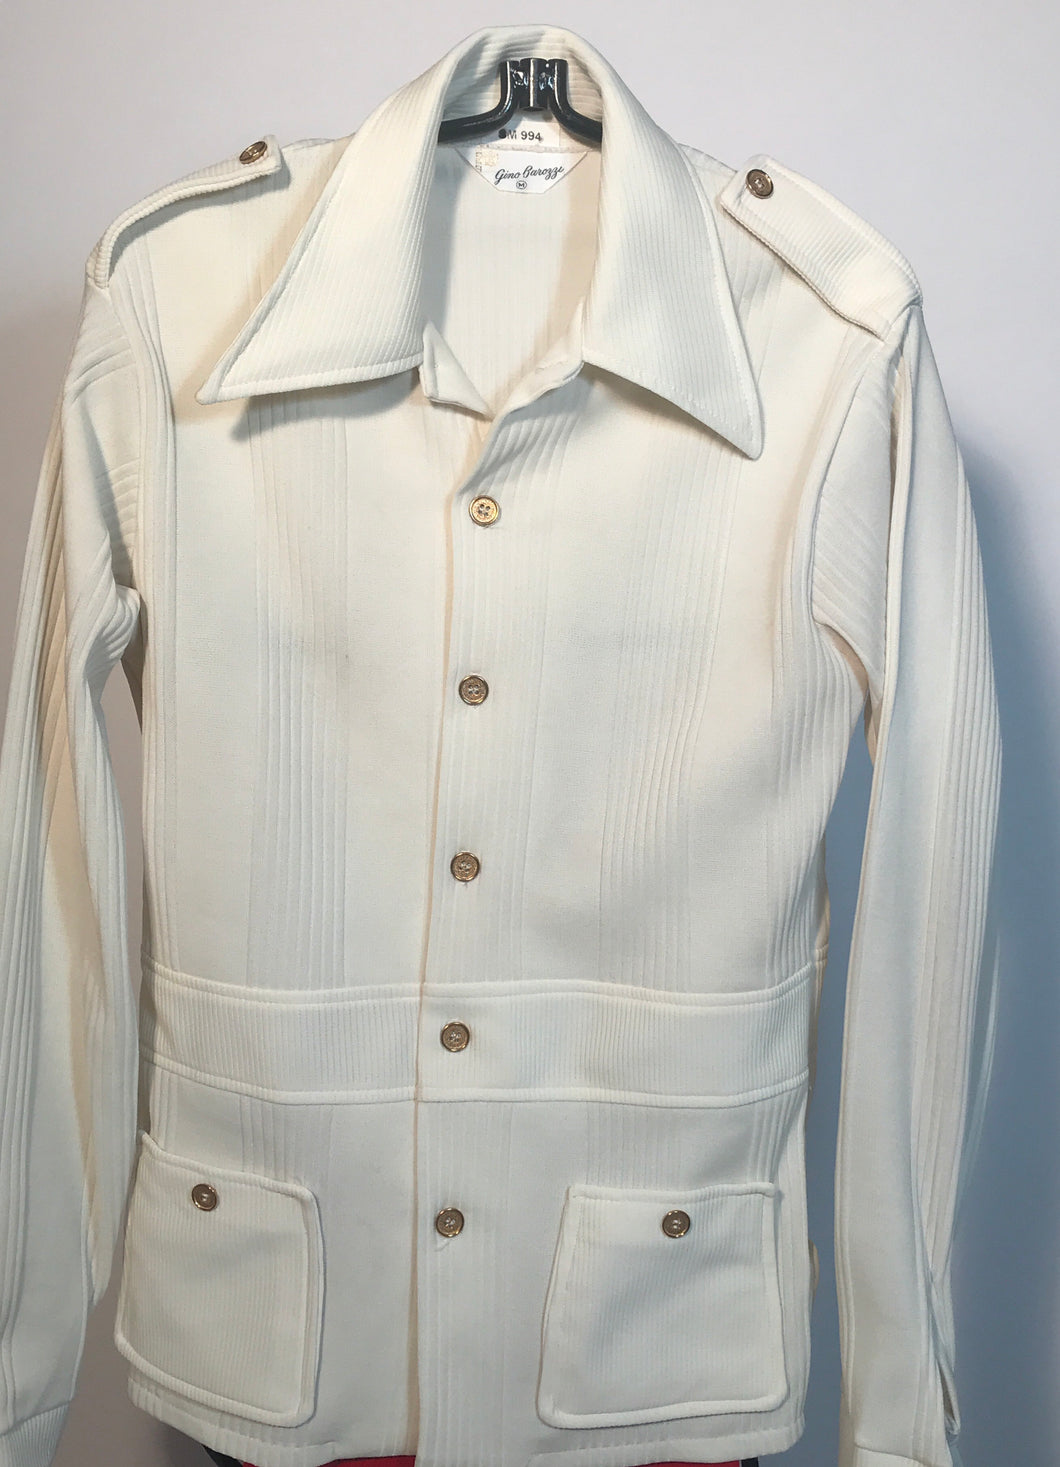 Gino Barozzi Men's Polyester 1970s Cream Button Down Shirt Size Medium RENTAL